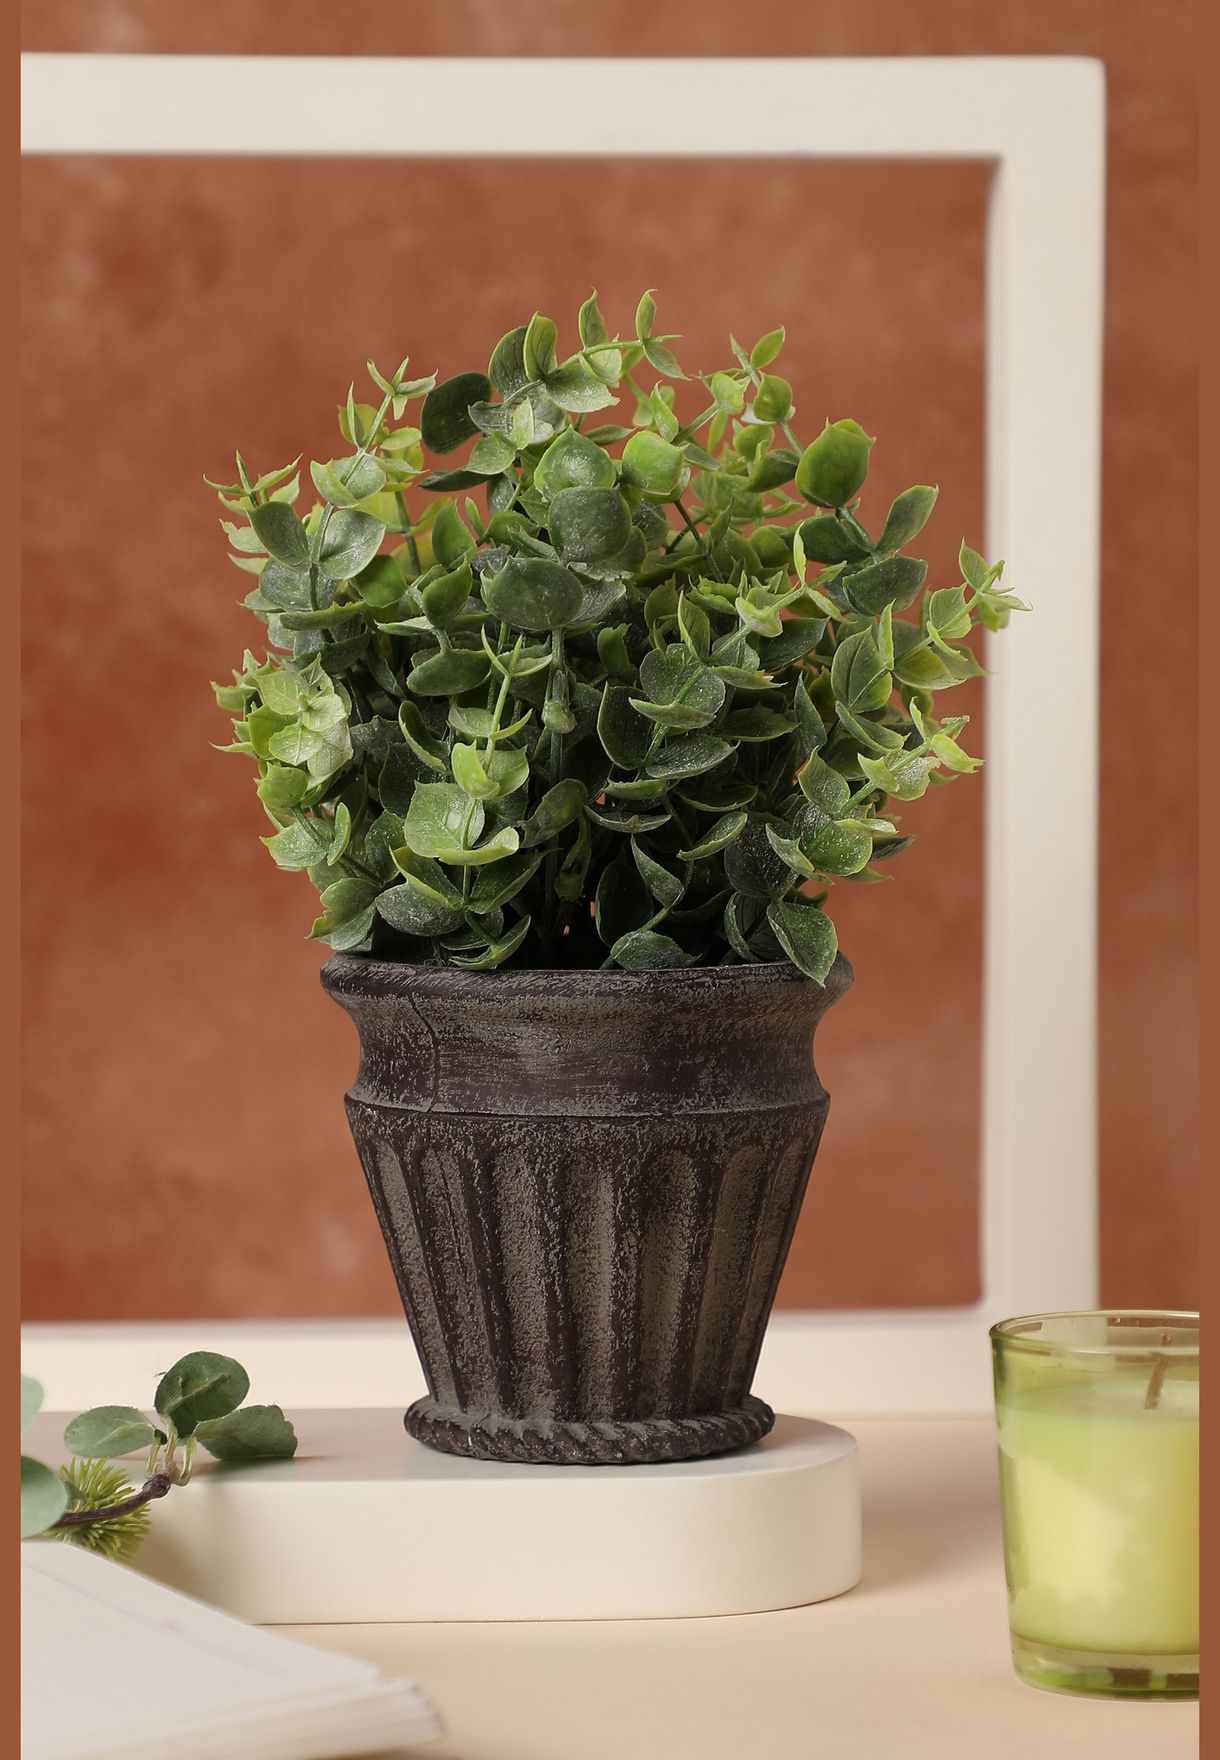 Rustic Textured Medium Ceramic Pot With Artificial Foliage For Home Decor Indoor & Outdoor 